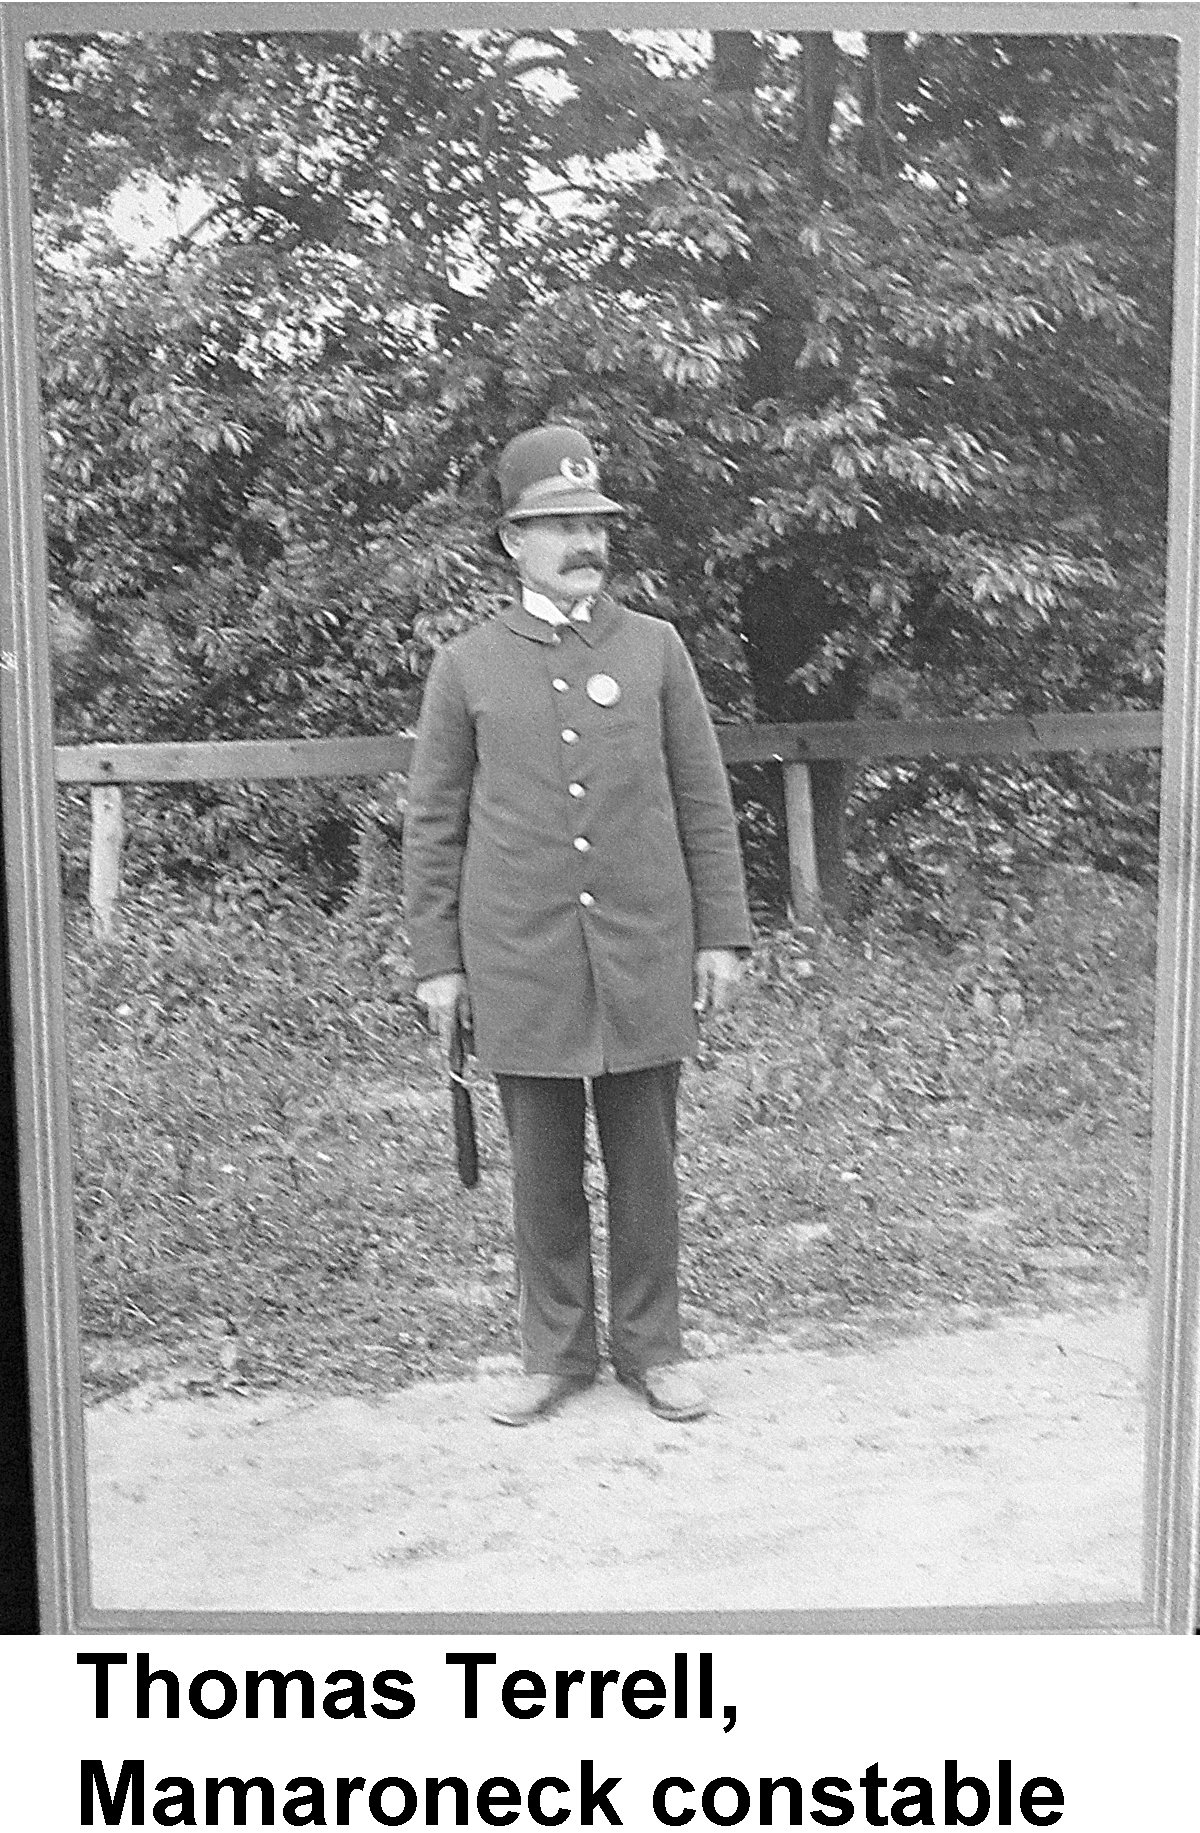 WD-41-A Thomas Terrell, Mamaroneck constable captioned.jpg